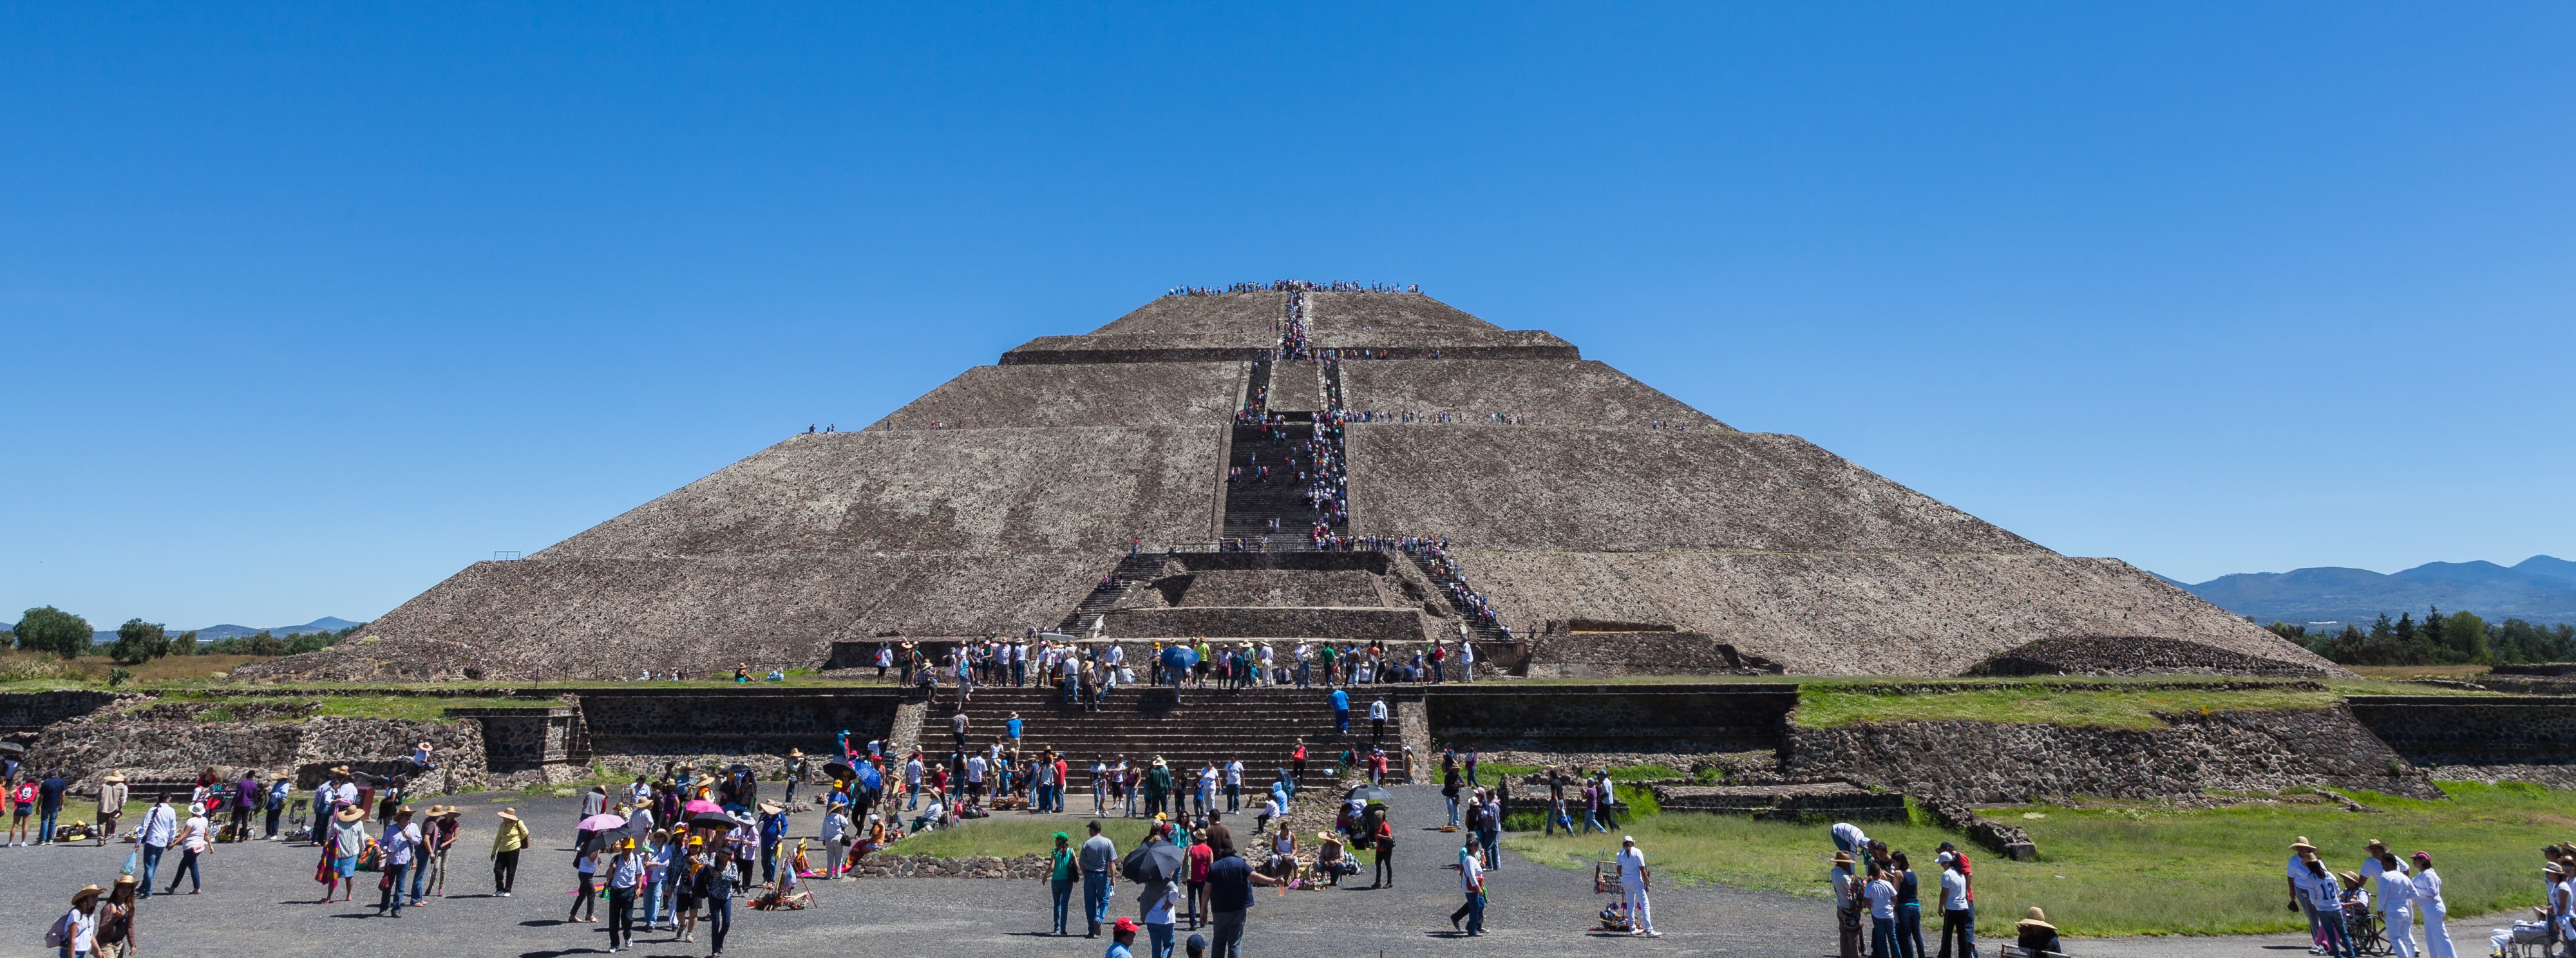 Teotihuacán, México, 2013-10-13, DD 94